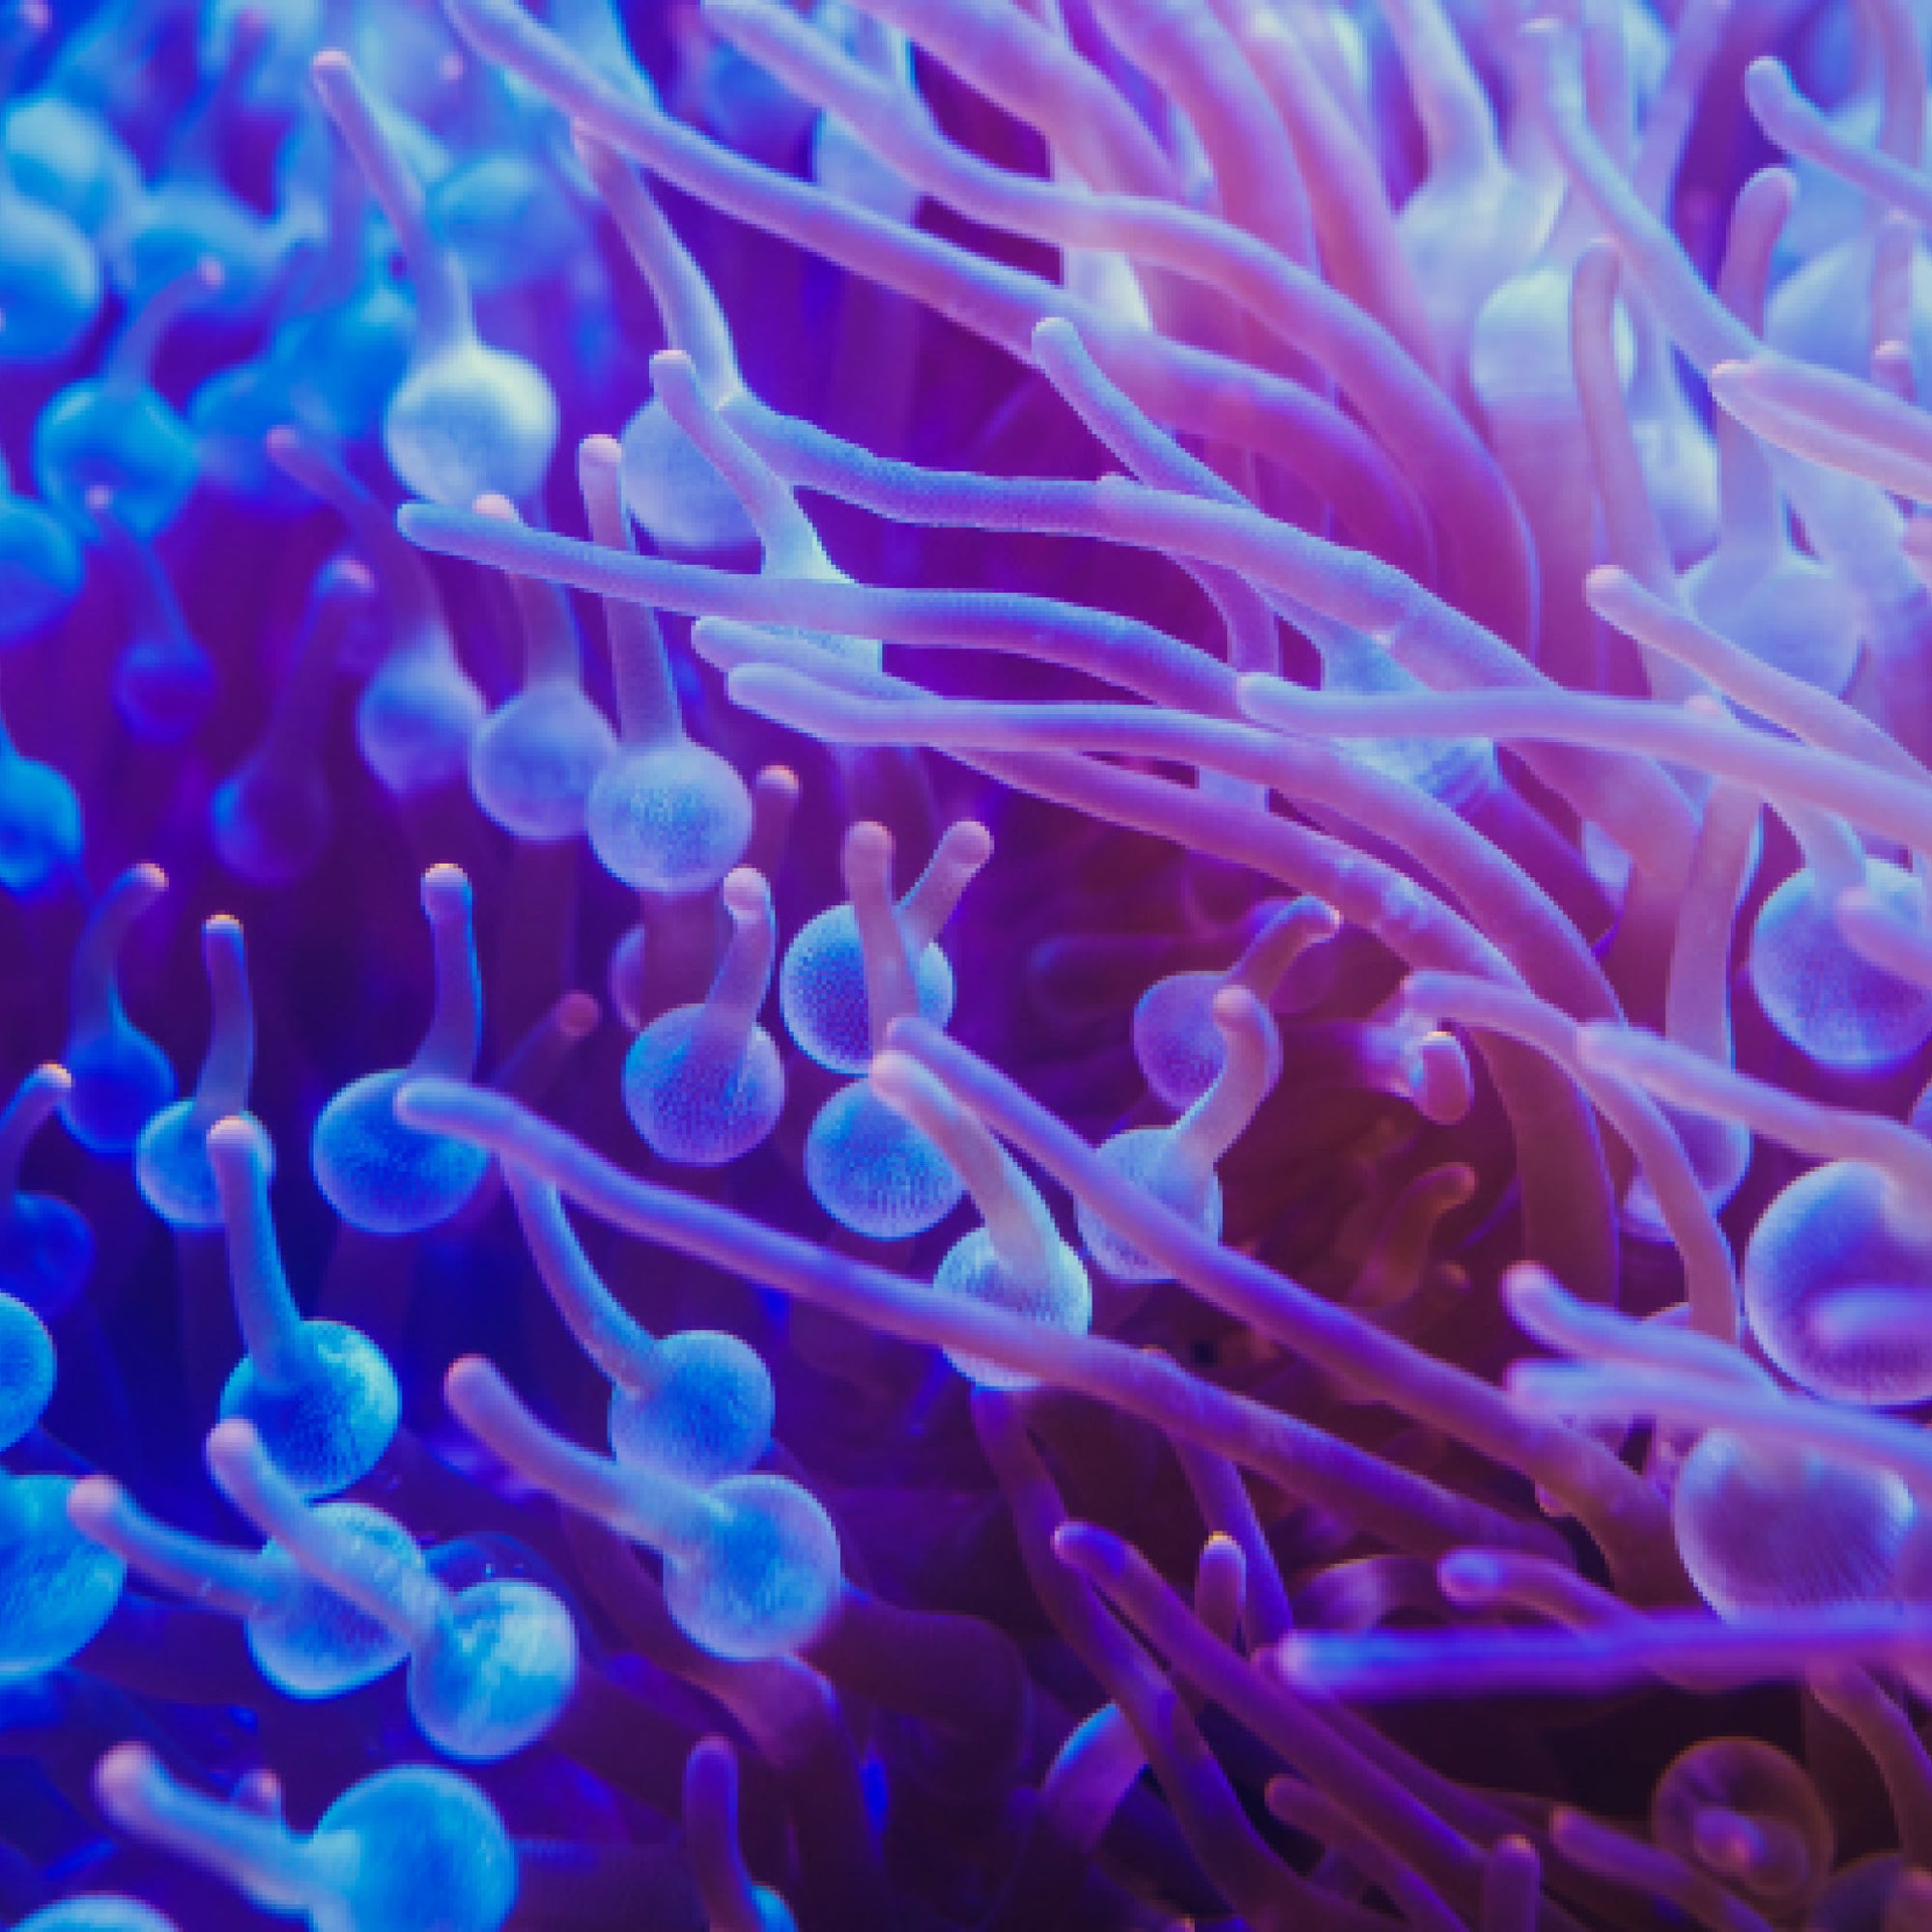 Sea Anemone. Closeup underwater photo of iridescent blue and purple sea anemone.  